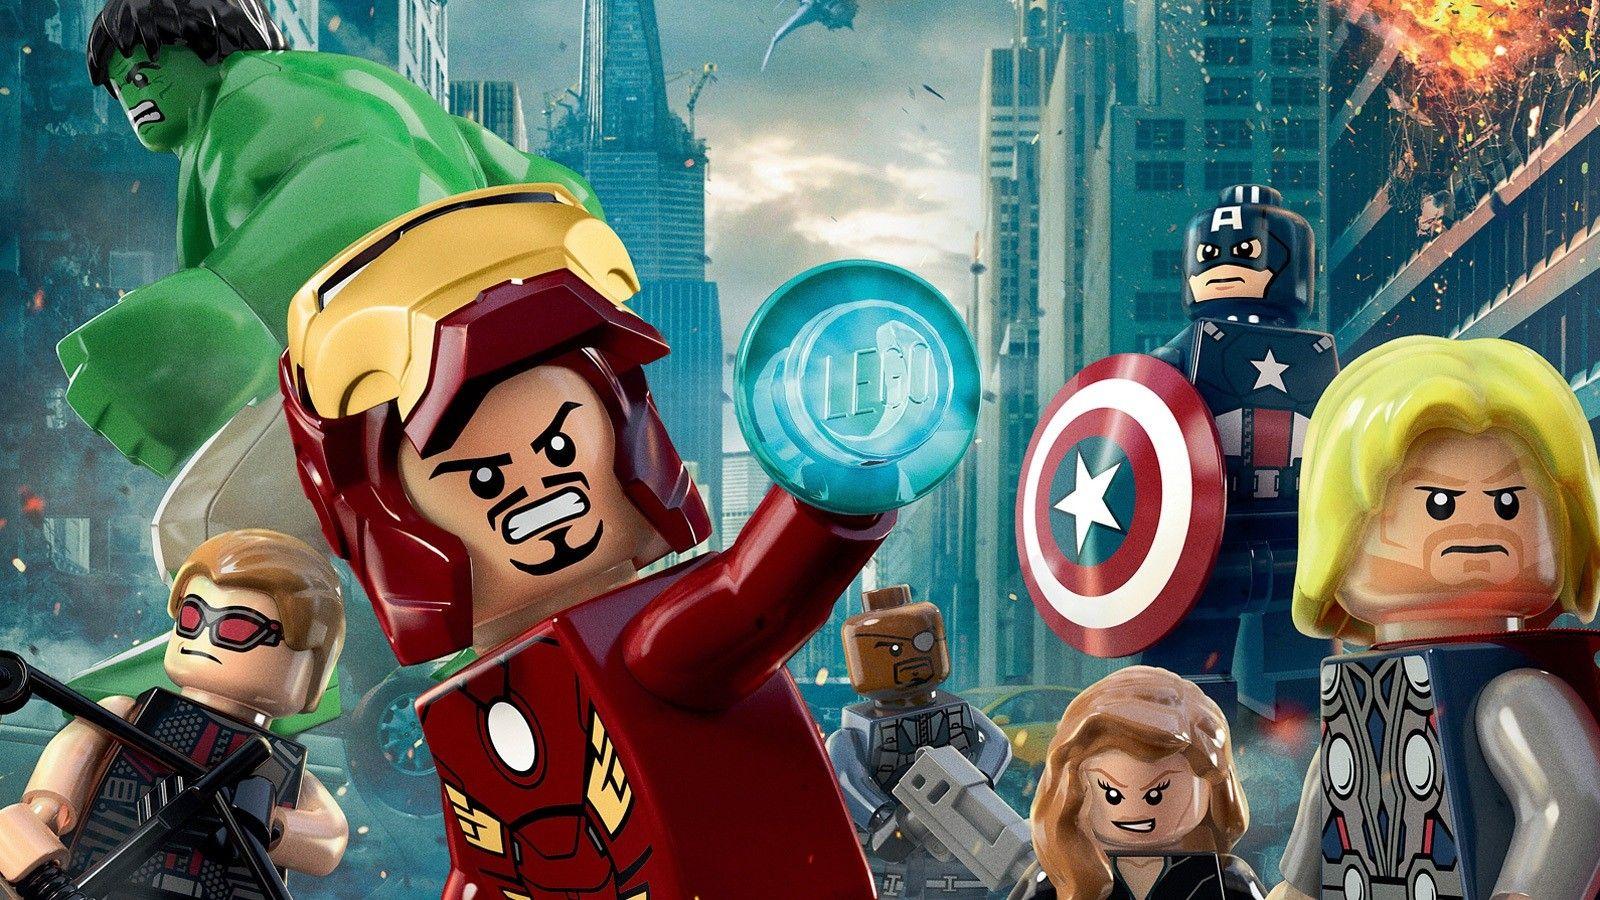 Desktop Wallpaper: Avengers Lego Funny Desktop Wallpaper. Lego Technic and Mindstorms